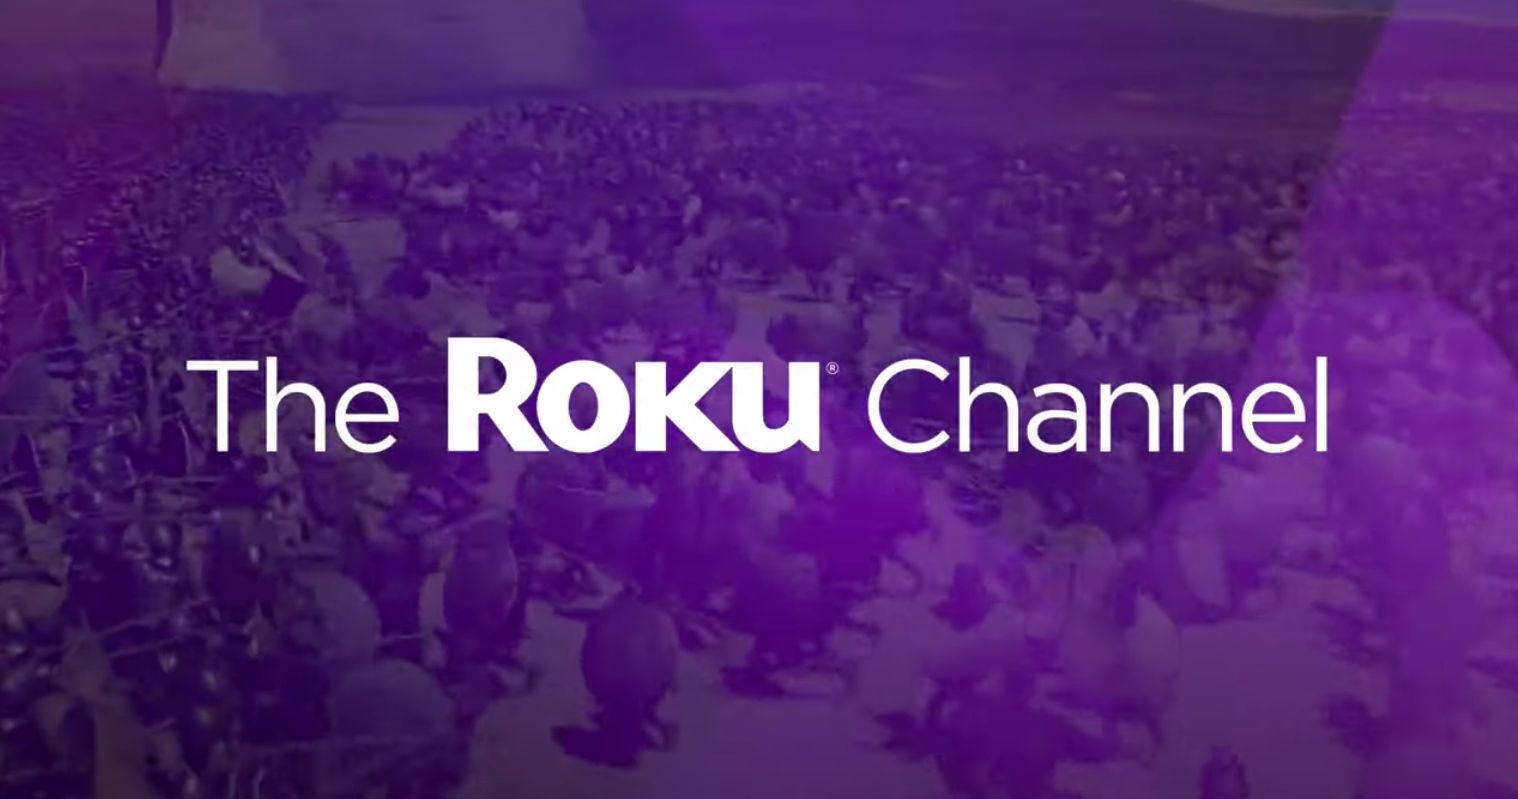 The Roku Channel logo.